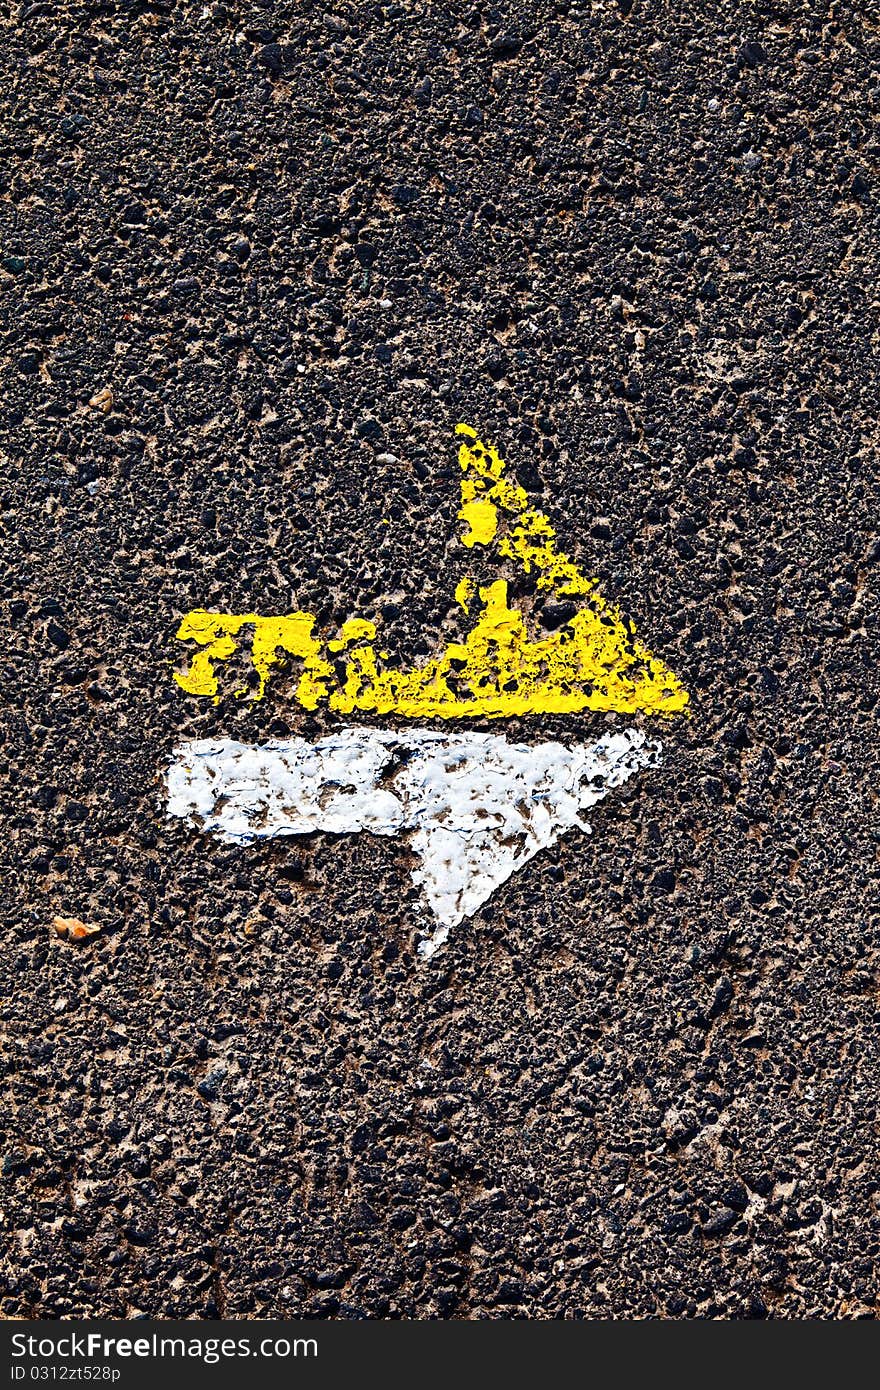 Arrow on a paveway for orientation. Arrow on a paveway for orientation